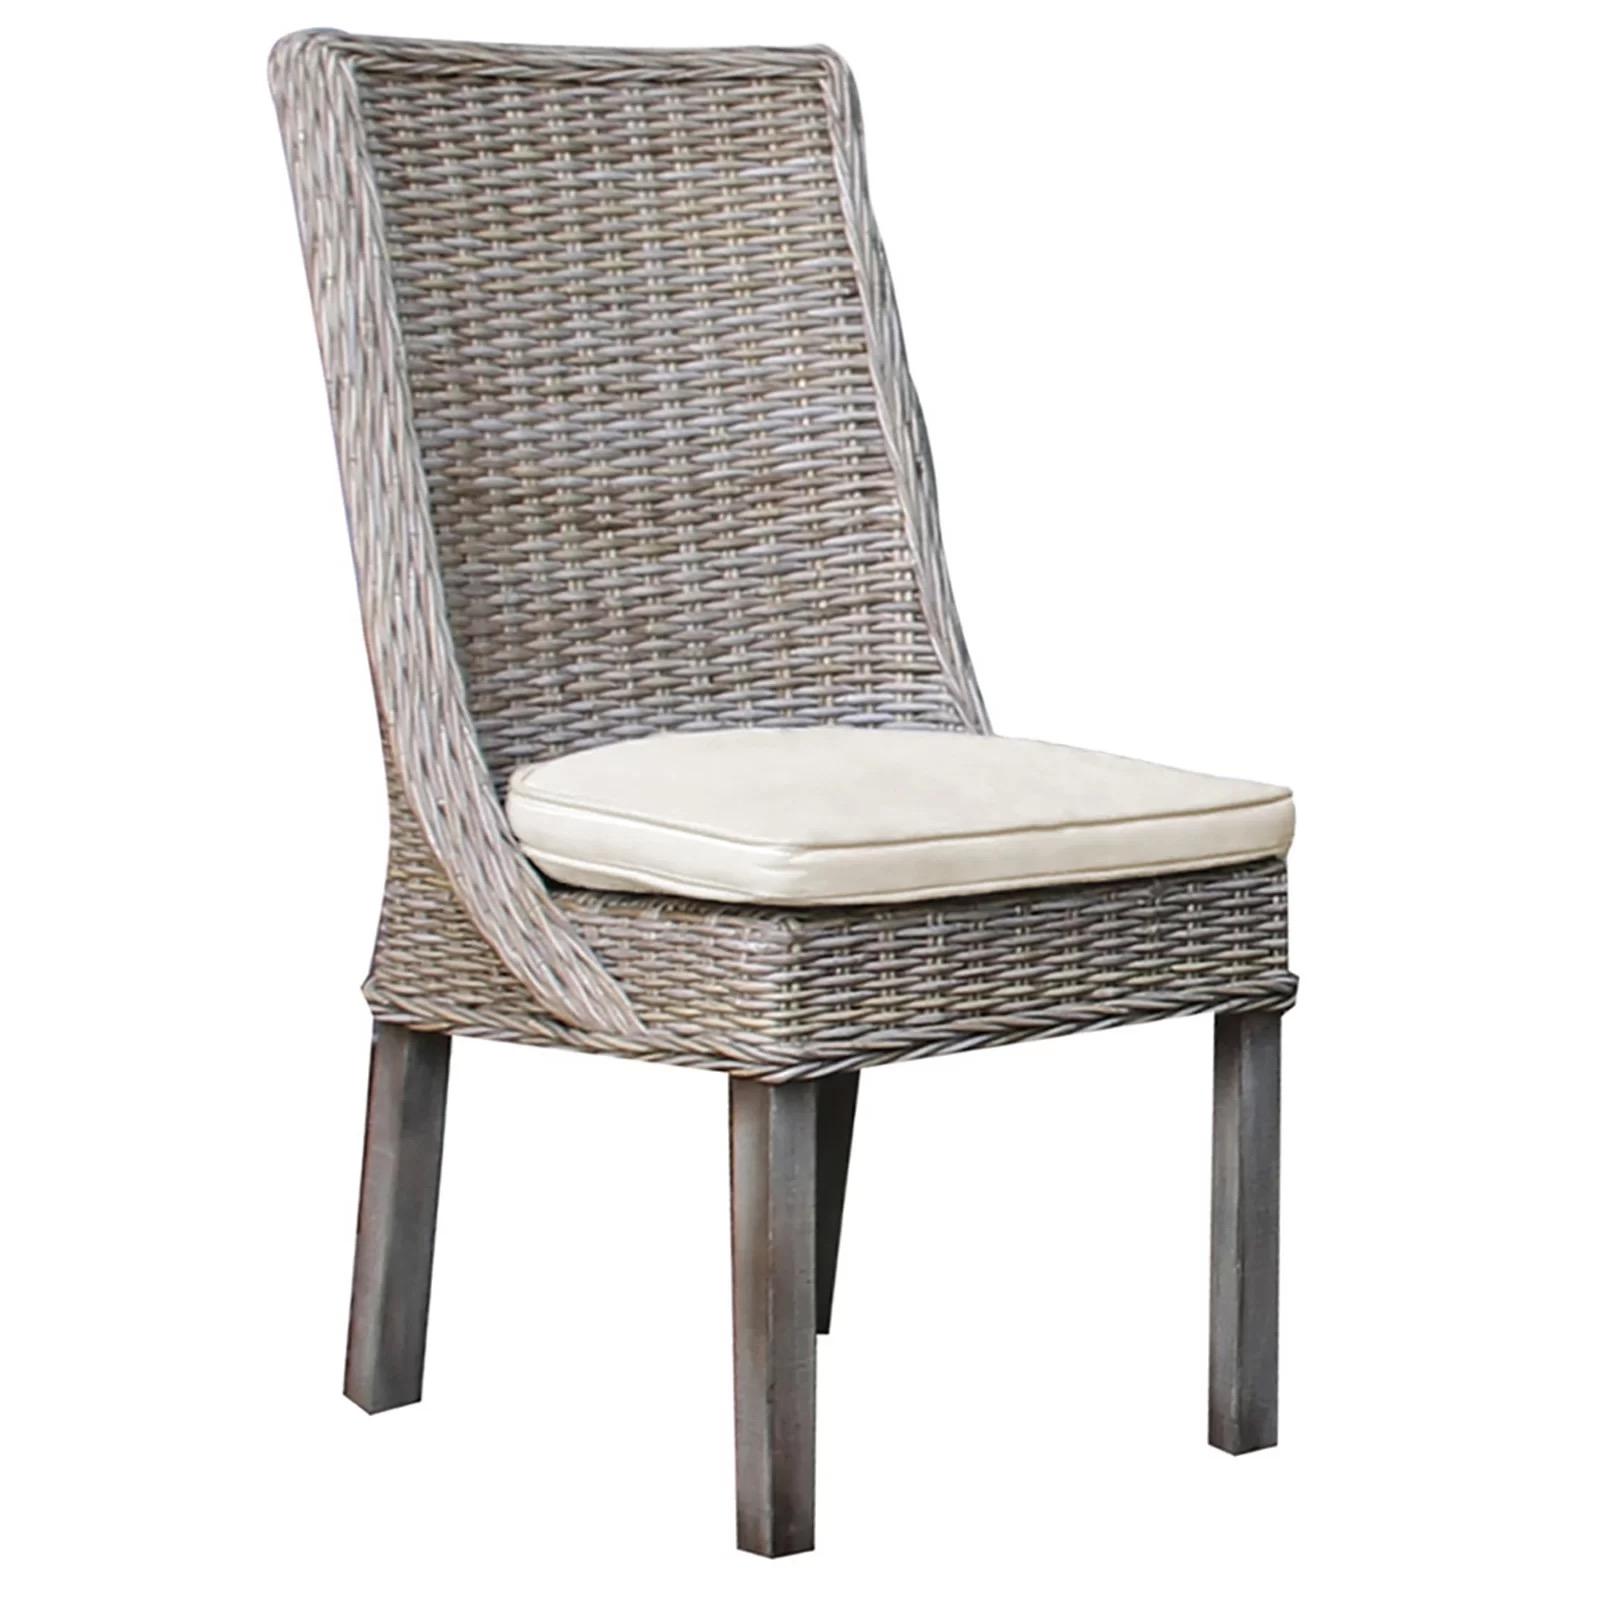 Classic Outdoor Side Chair Exuma PJS-3001-KBU-SC in Gray, Beige Fabric